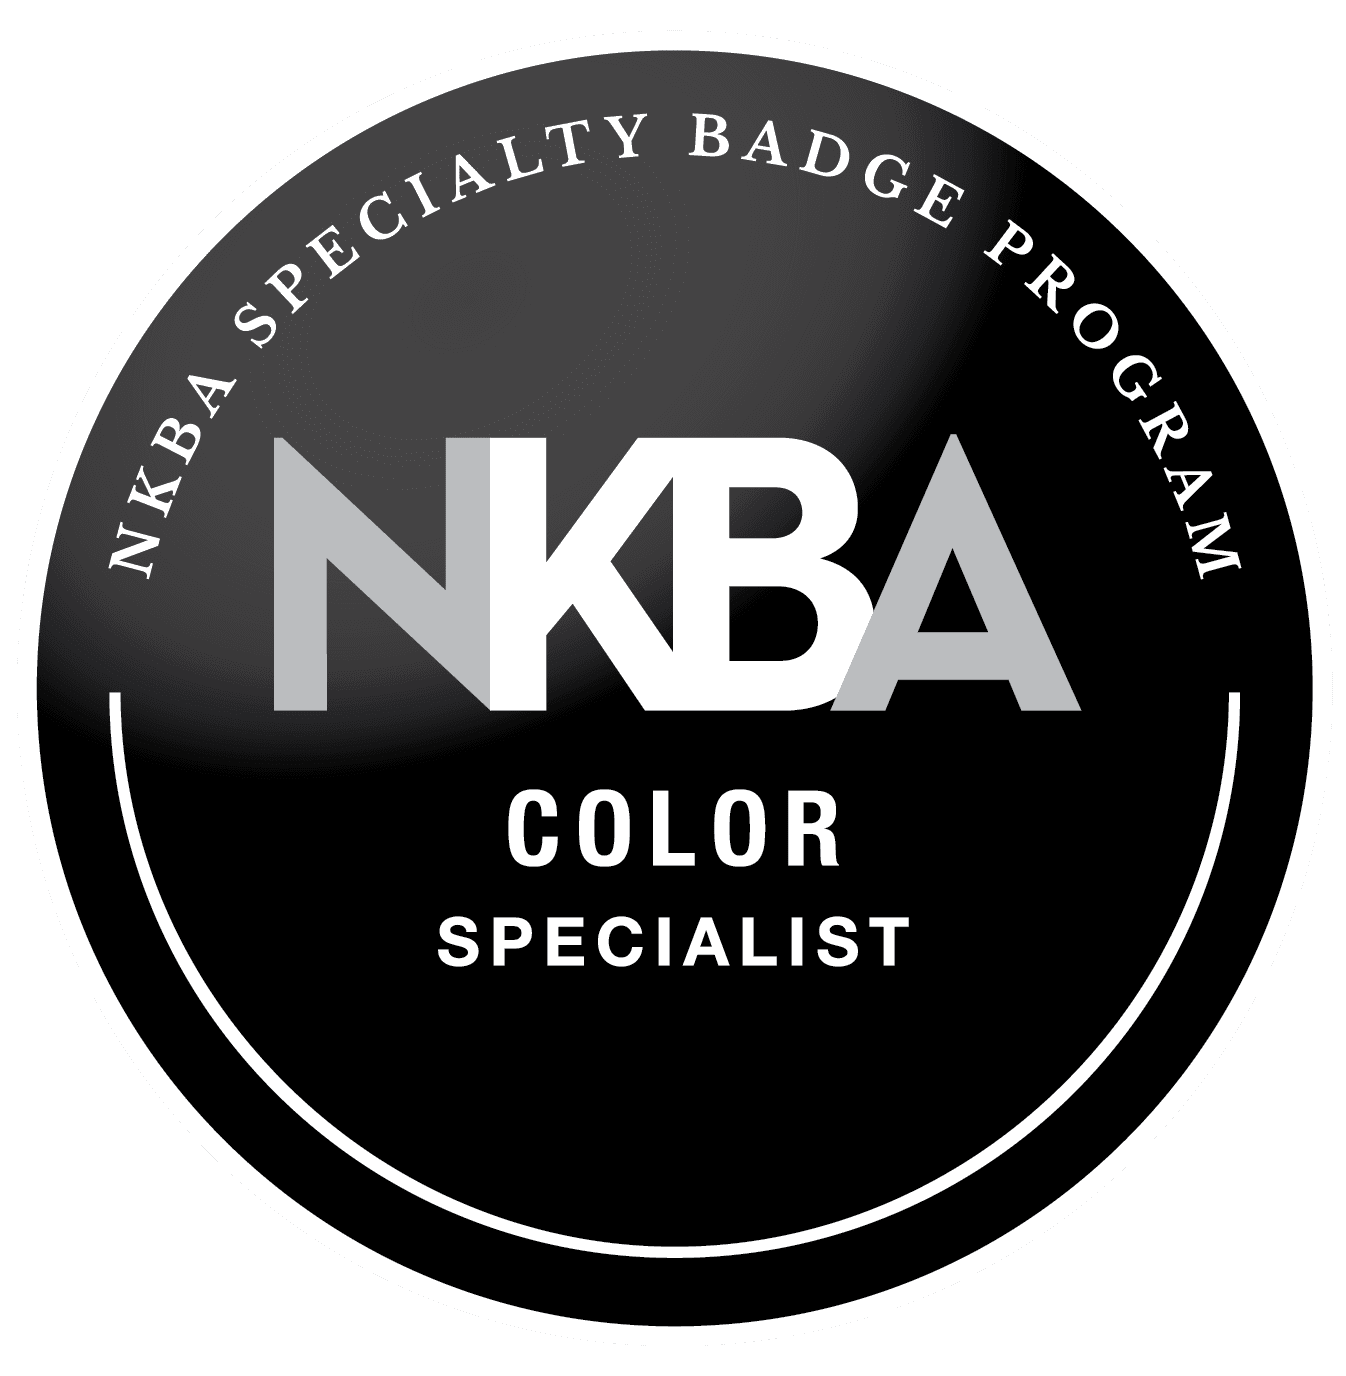 NKBA Color Specialist